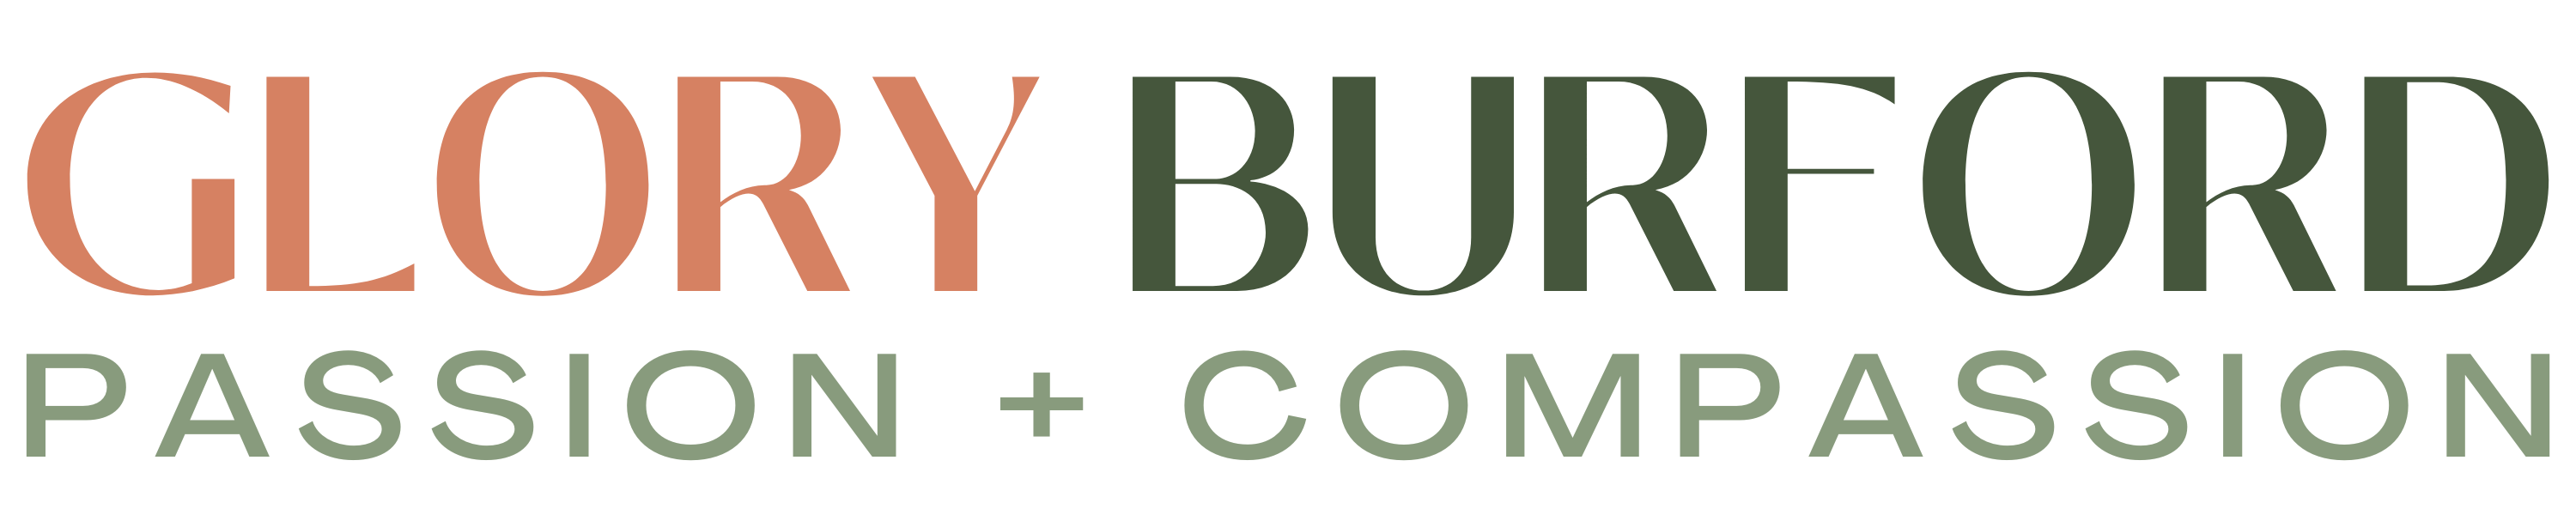 Glory Burford logo